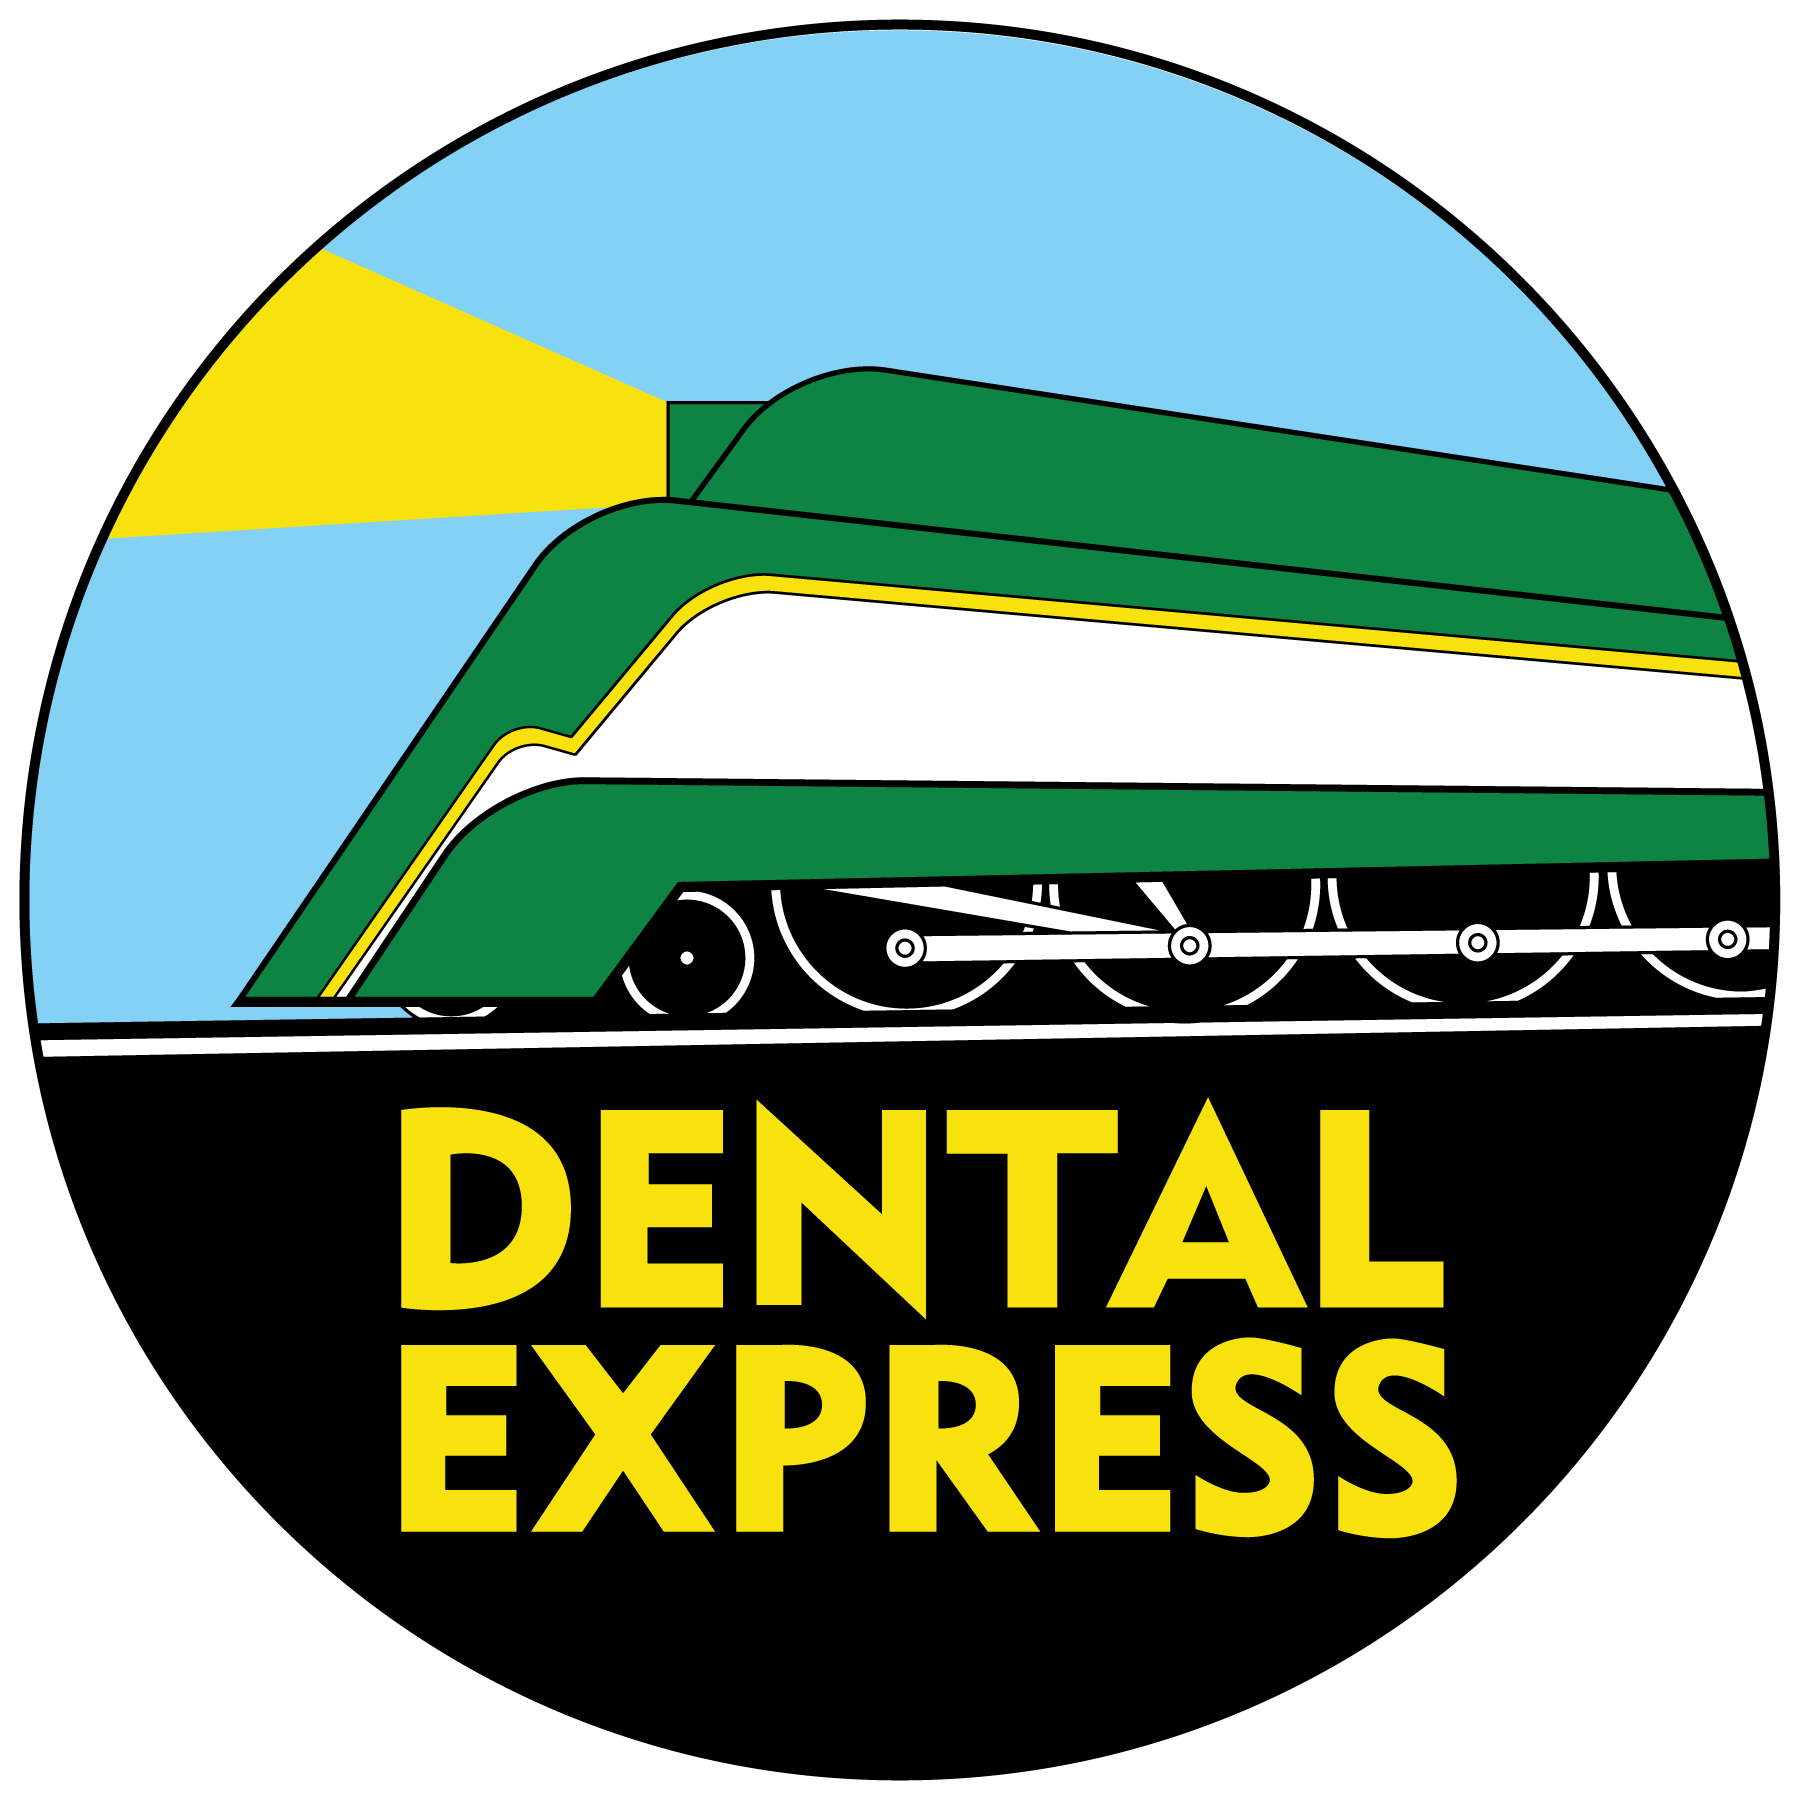 Dental Express